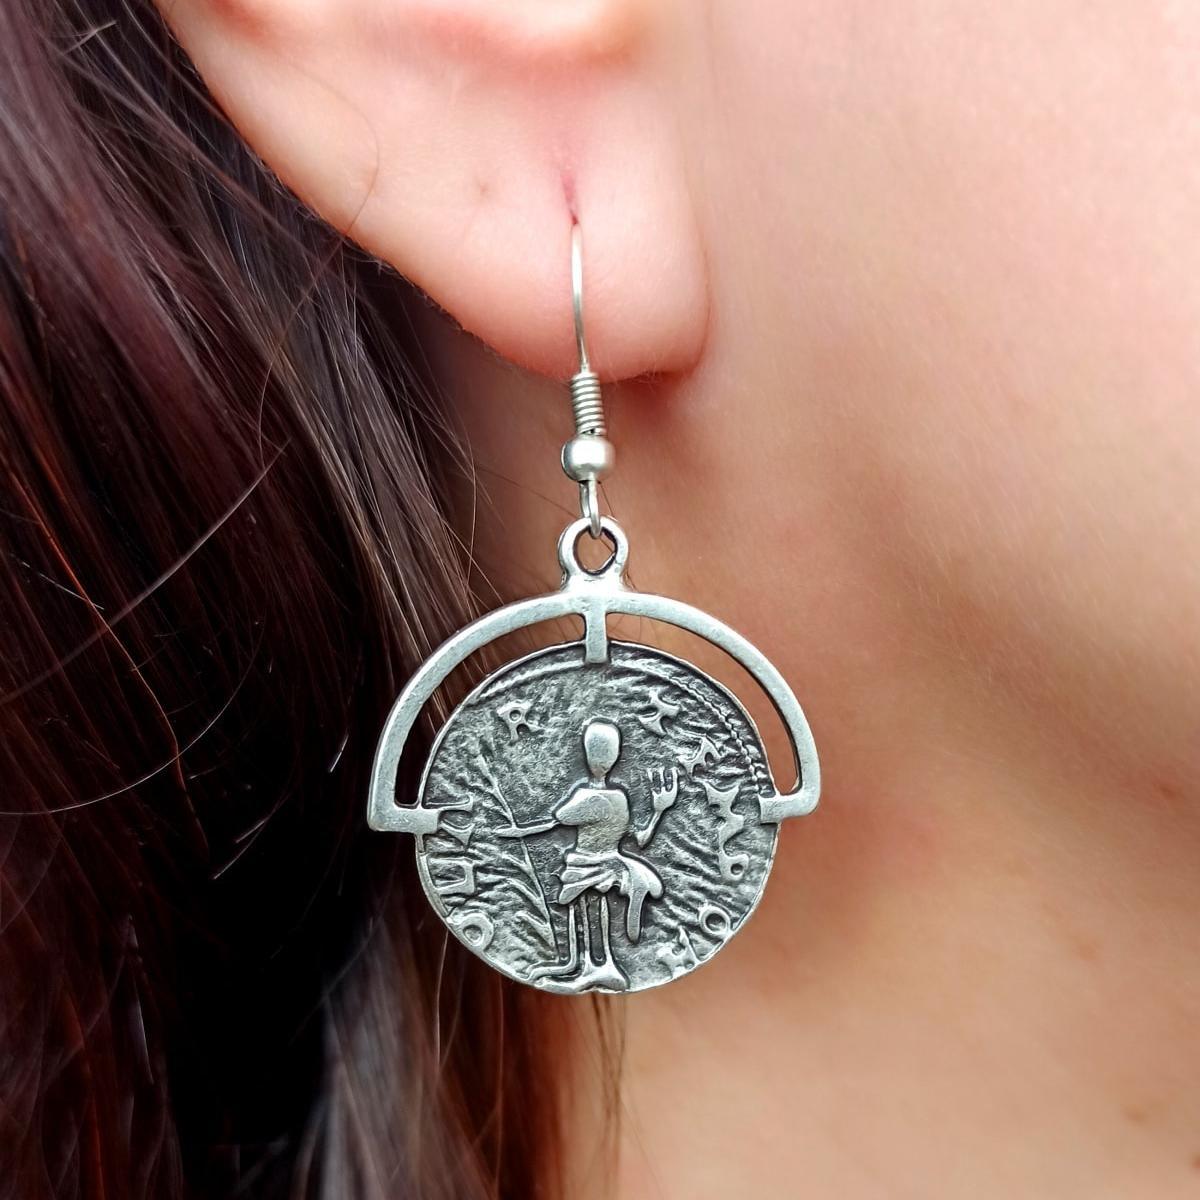 Greek Mythology Earrings • Handmade Sterling Silver Earrings - Trending Silver Gifts